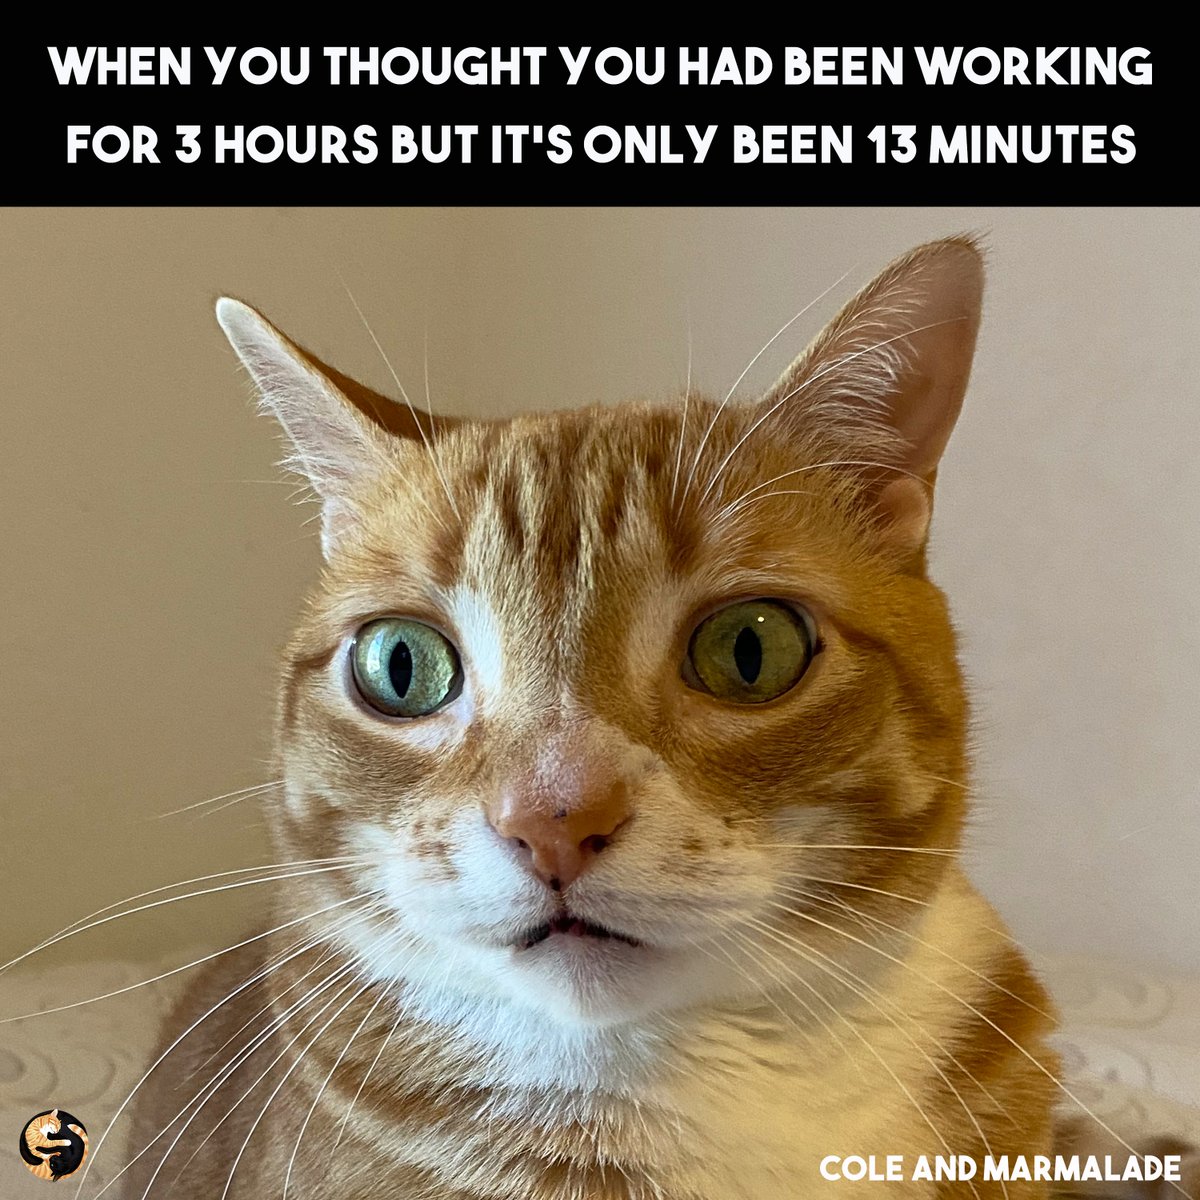 We feel ya Marm! 😿

#BackToWork #BackToReality #Work #Cats